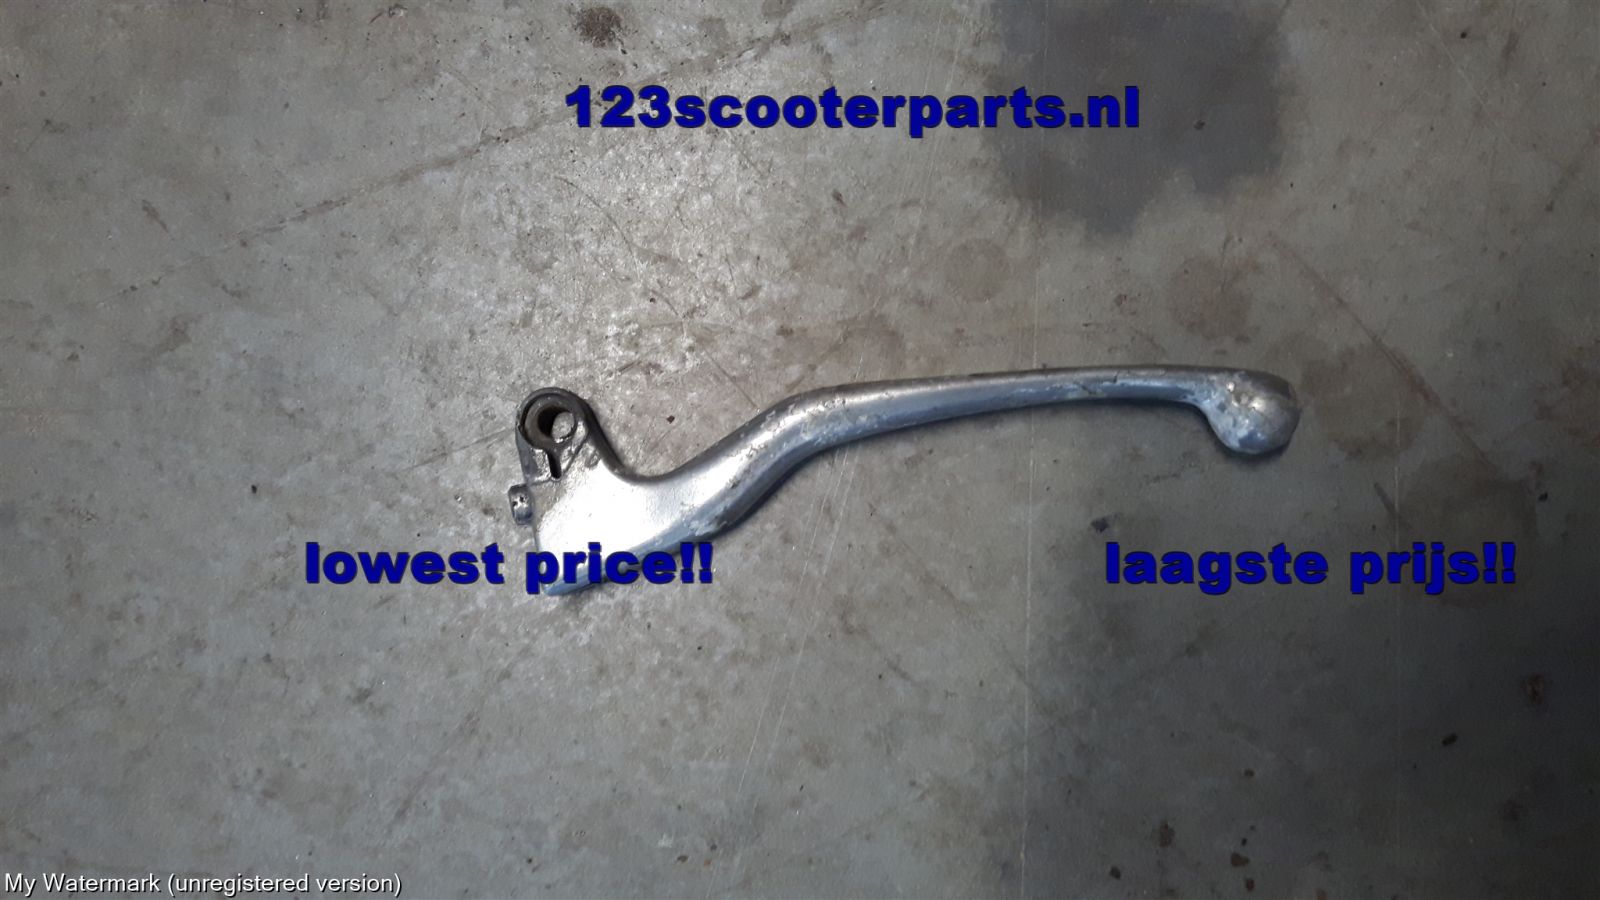 Peugeot TKR left brake handle